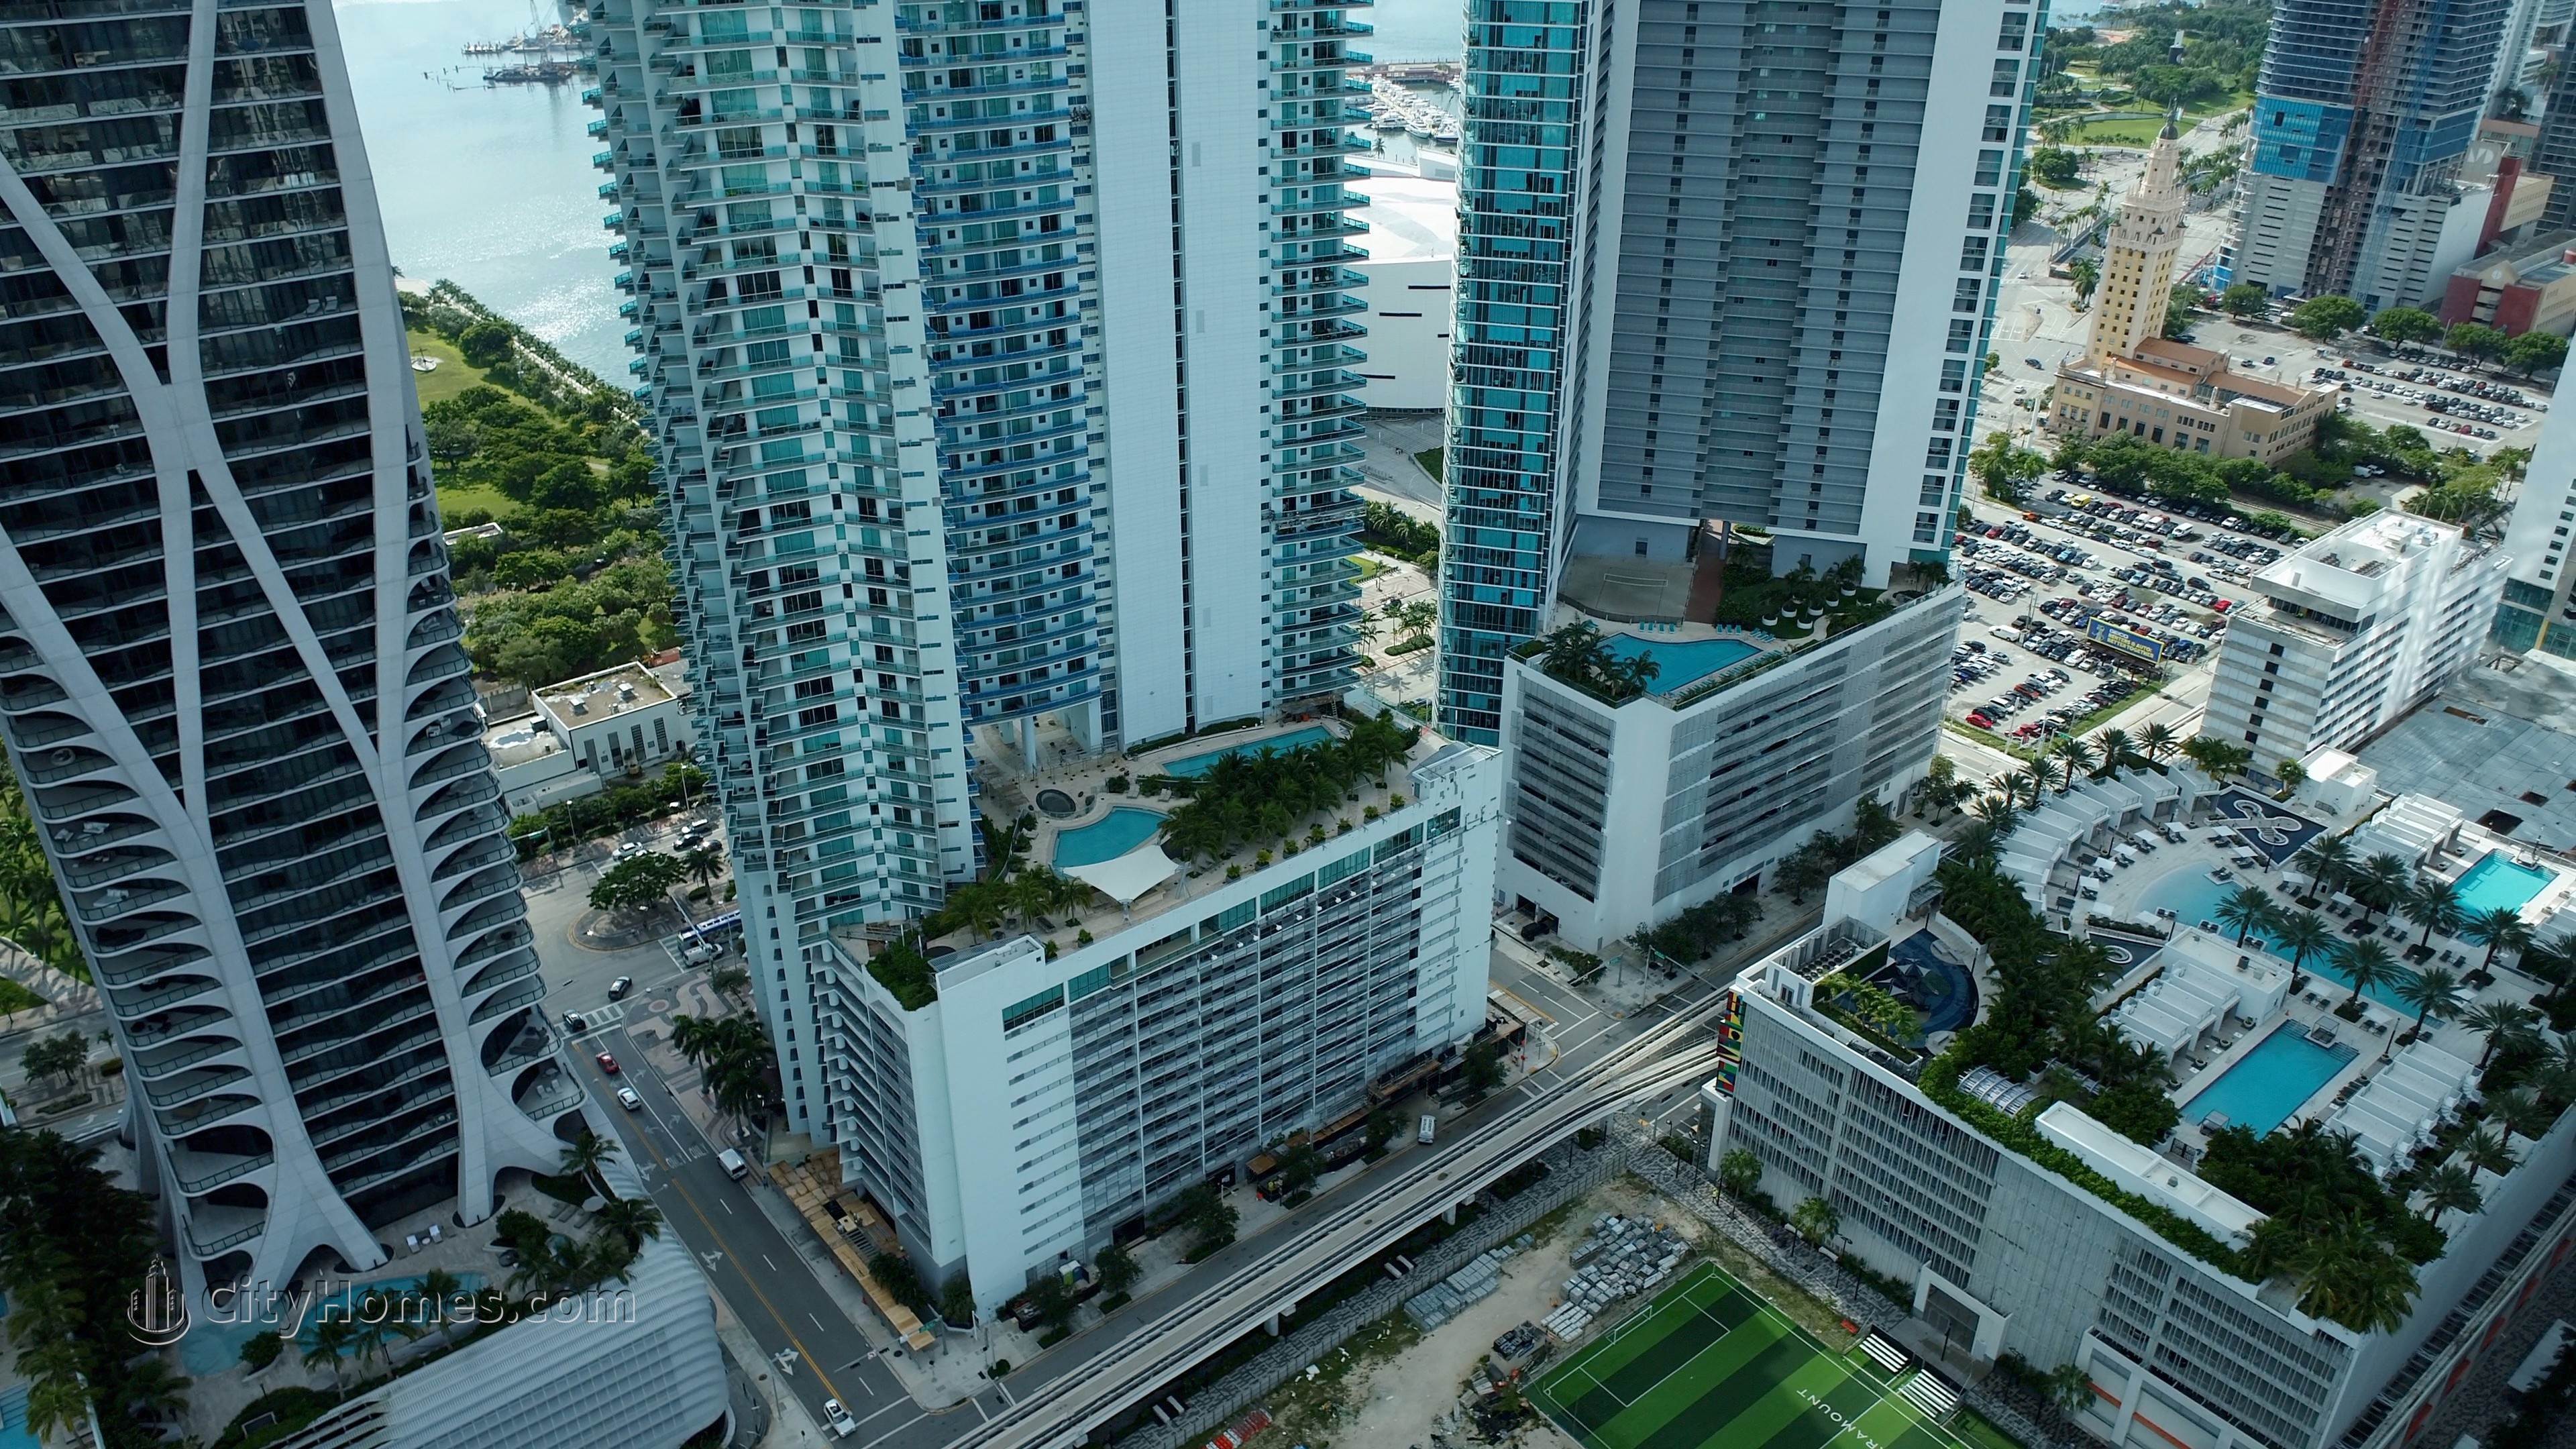 4. 900 Biscayne Bay byggnad vid 900 Biscayne Boulevard, Miami, FL 33132